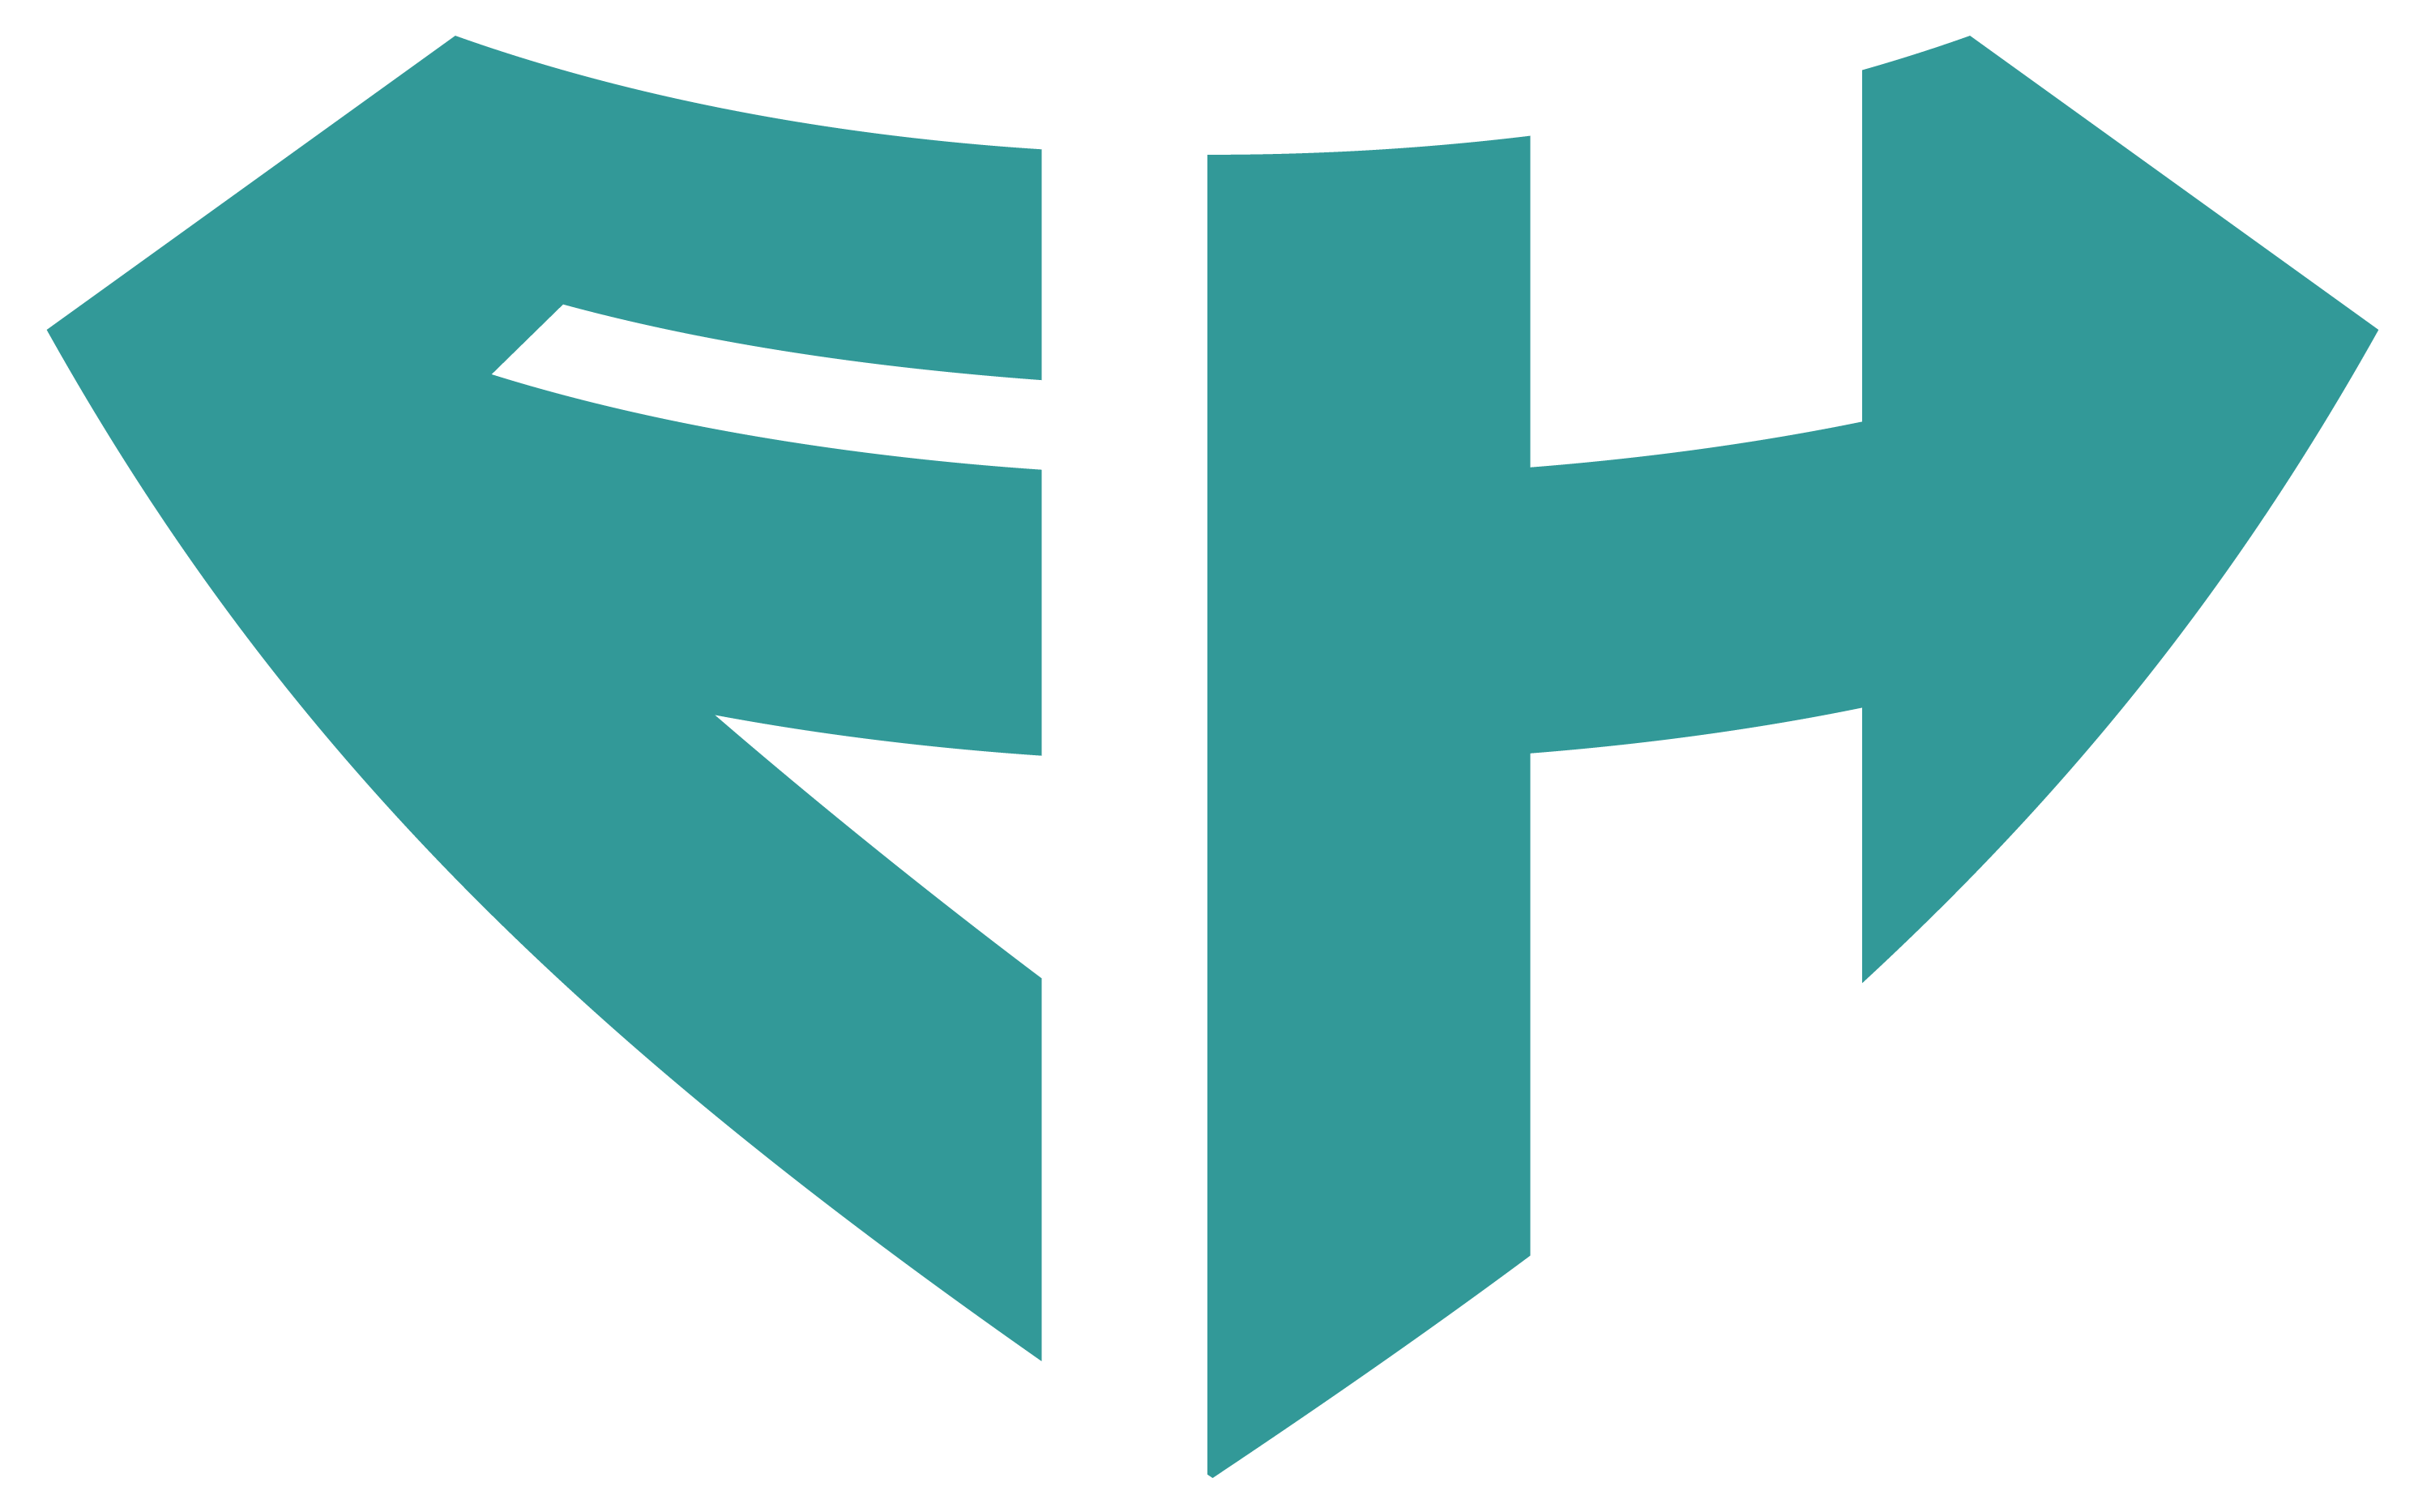 EntwicklerHeld Logo